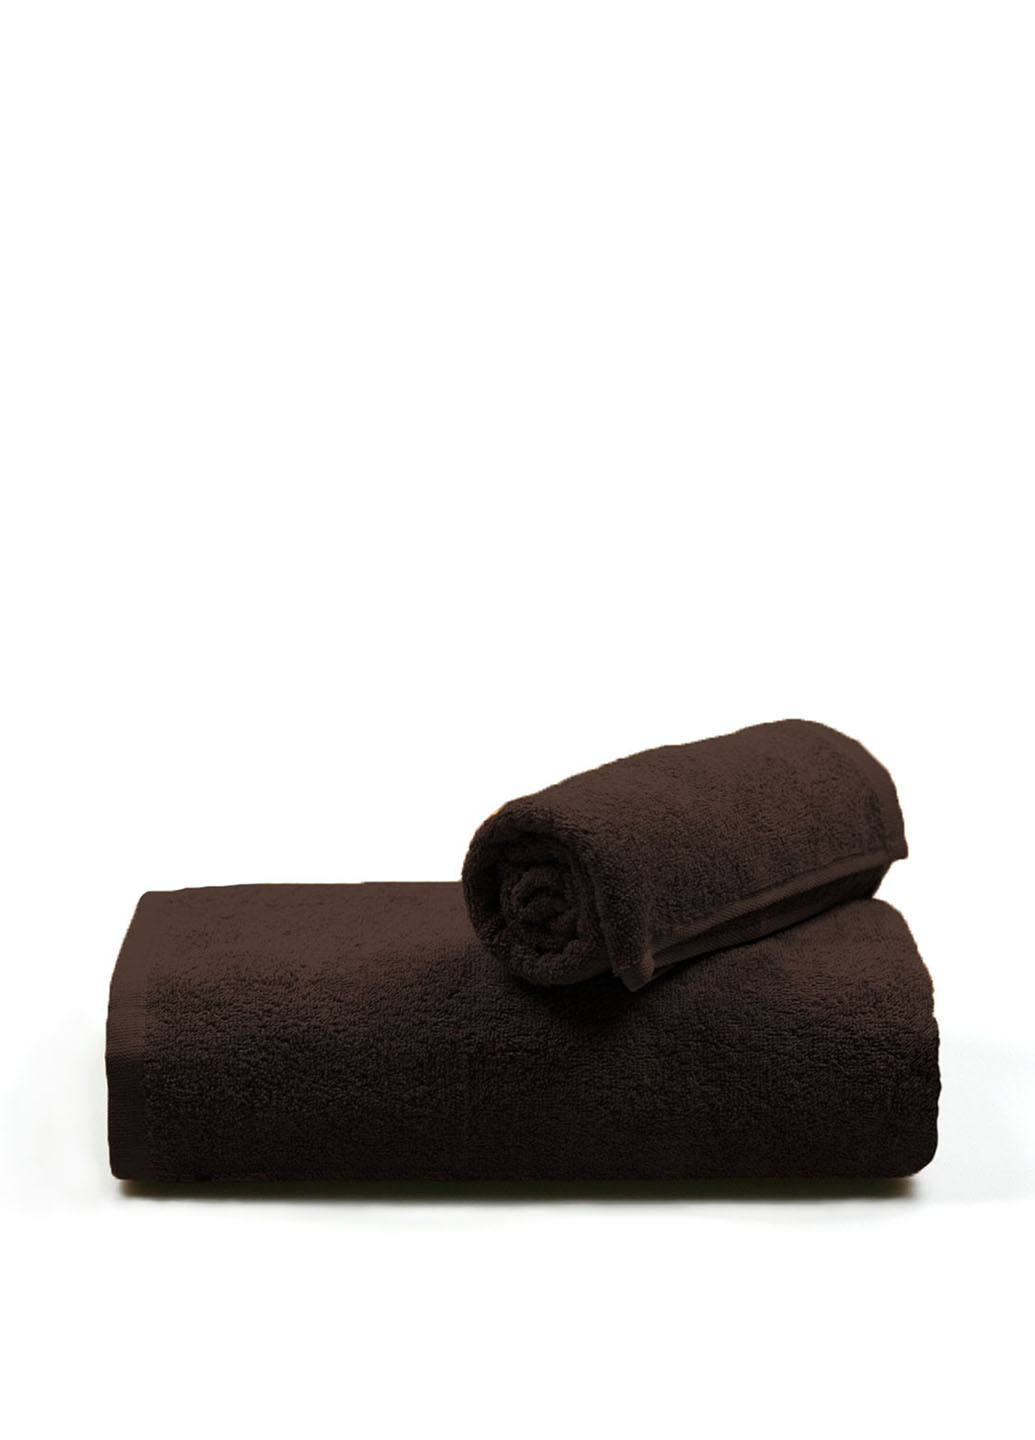 Home Line полотенце, 50х90 см однотонный шоколадный производство - Турция